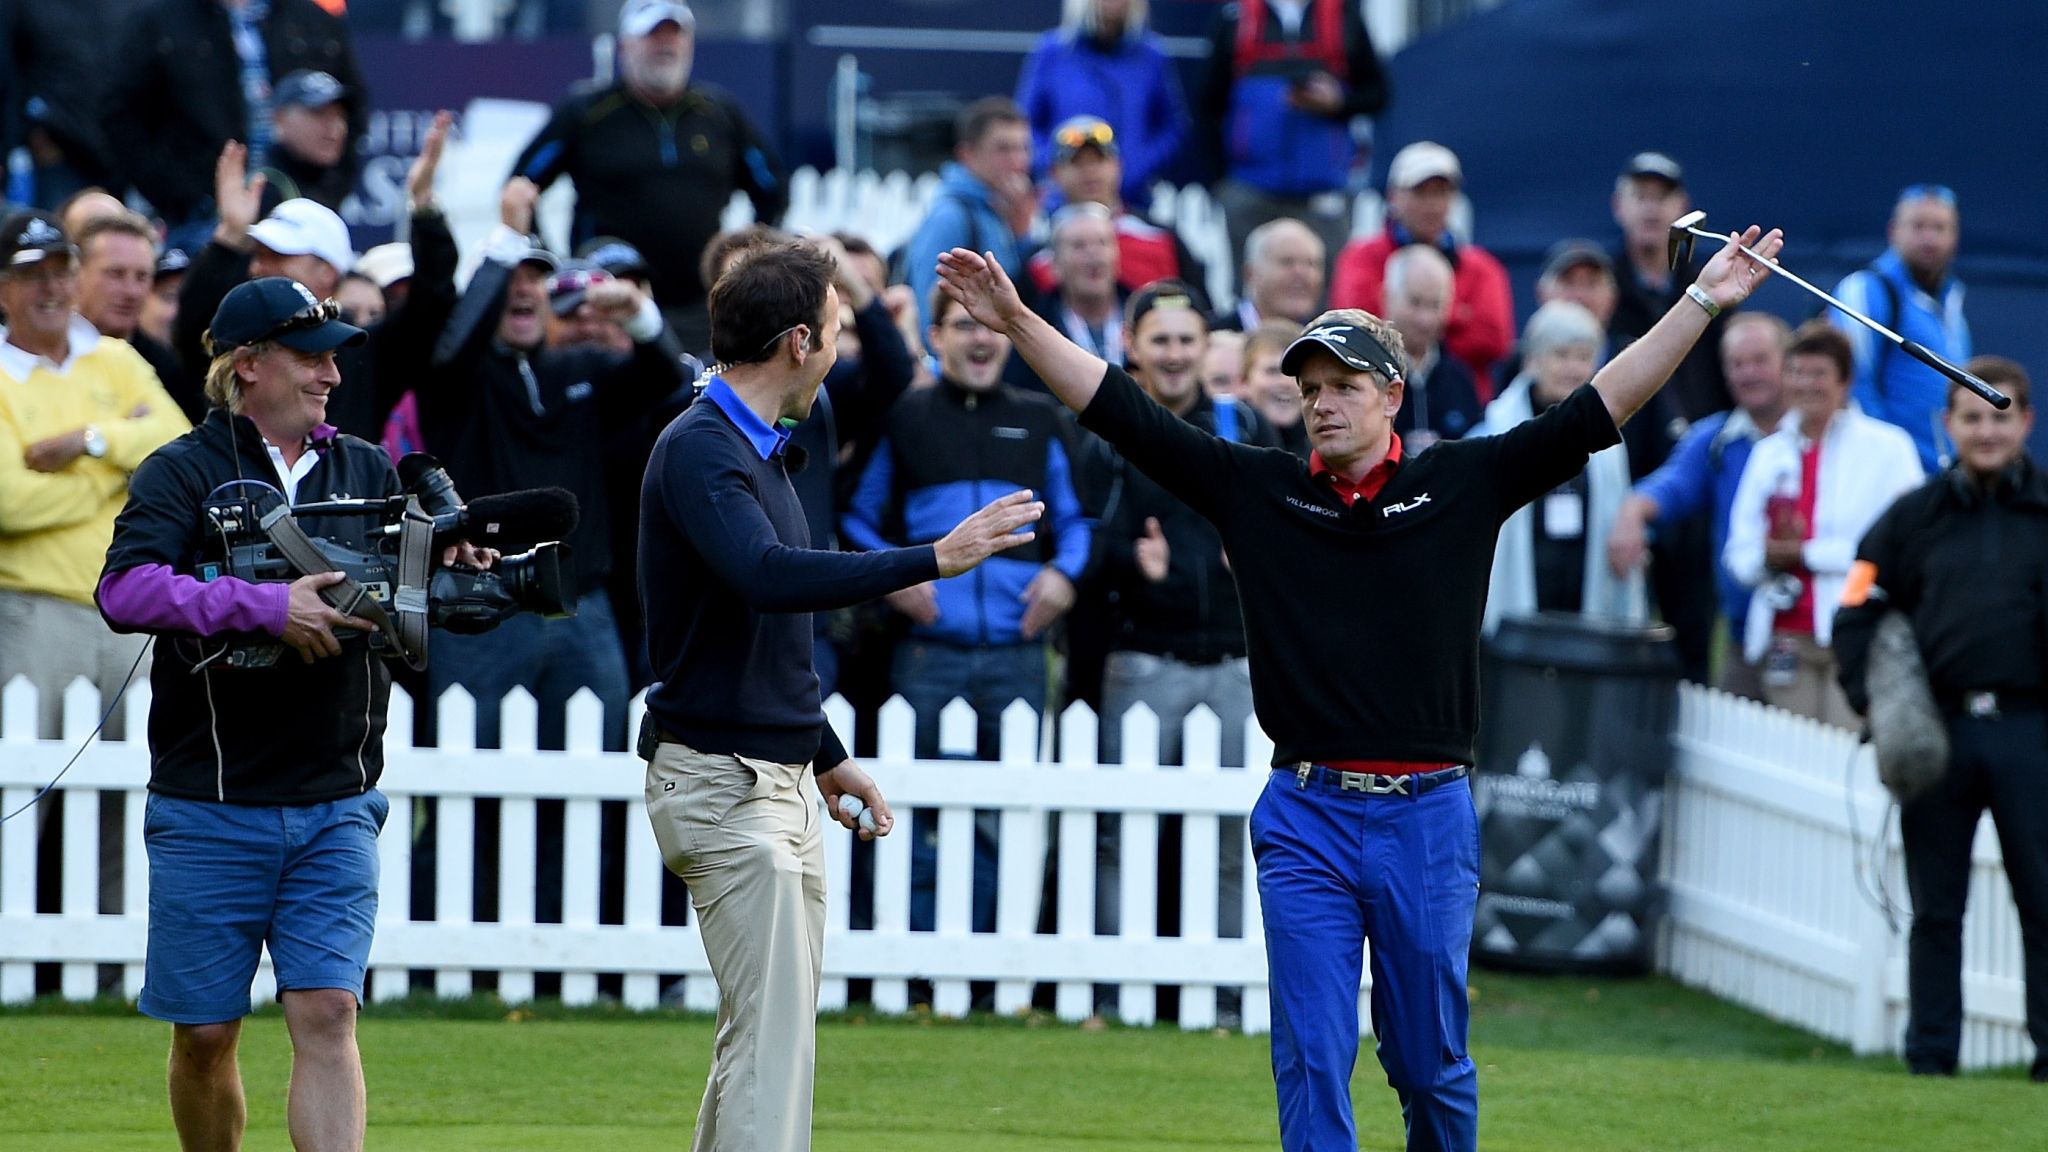 British Masters live Masterclasses a big hit at Woburn | Golf News ...